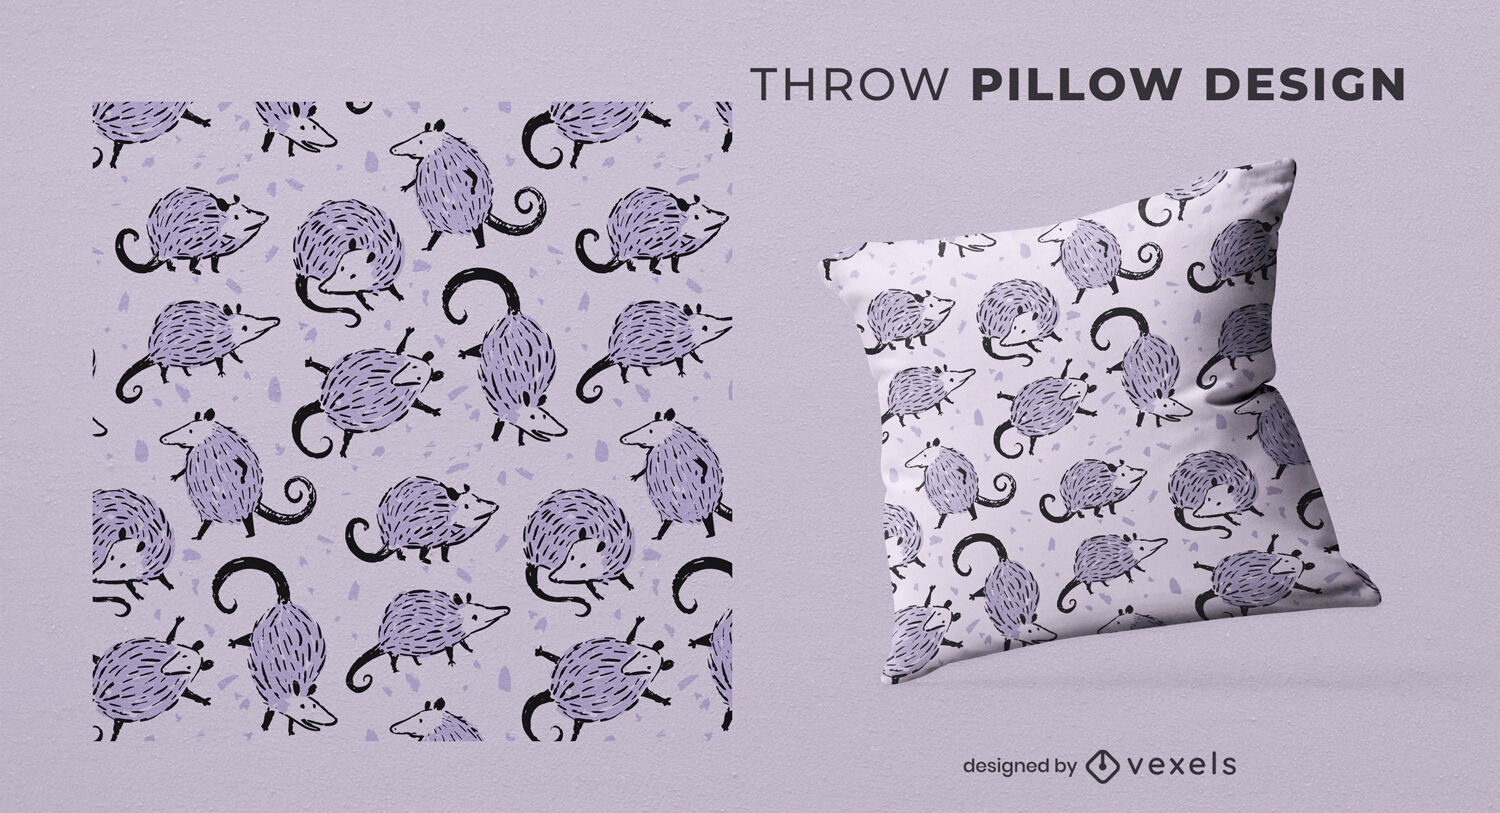 Lindo diseño de almohada de tiro con patrón de zarigüeya